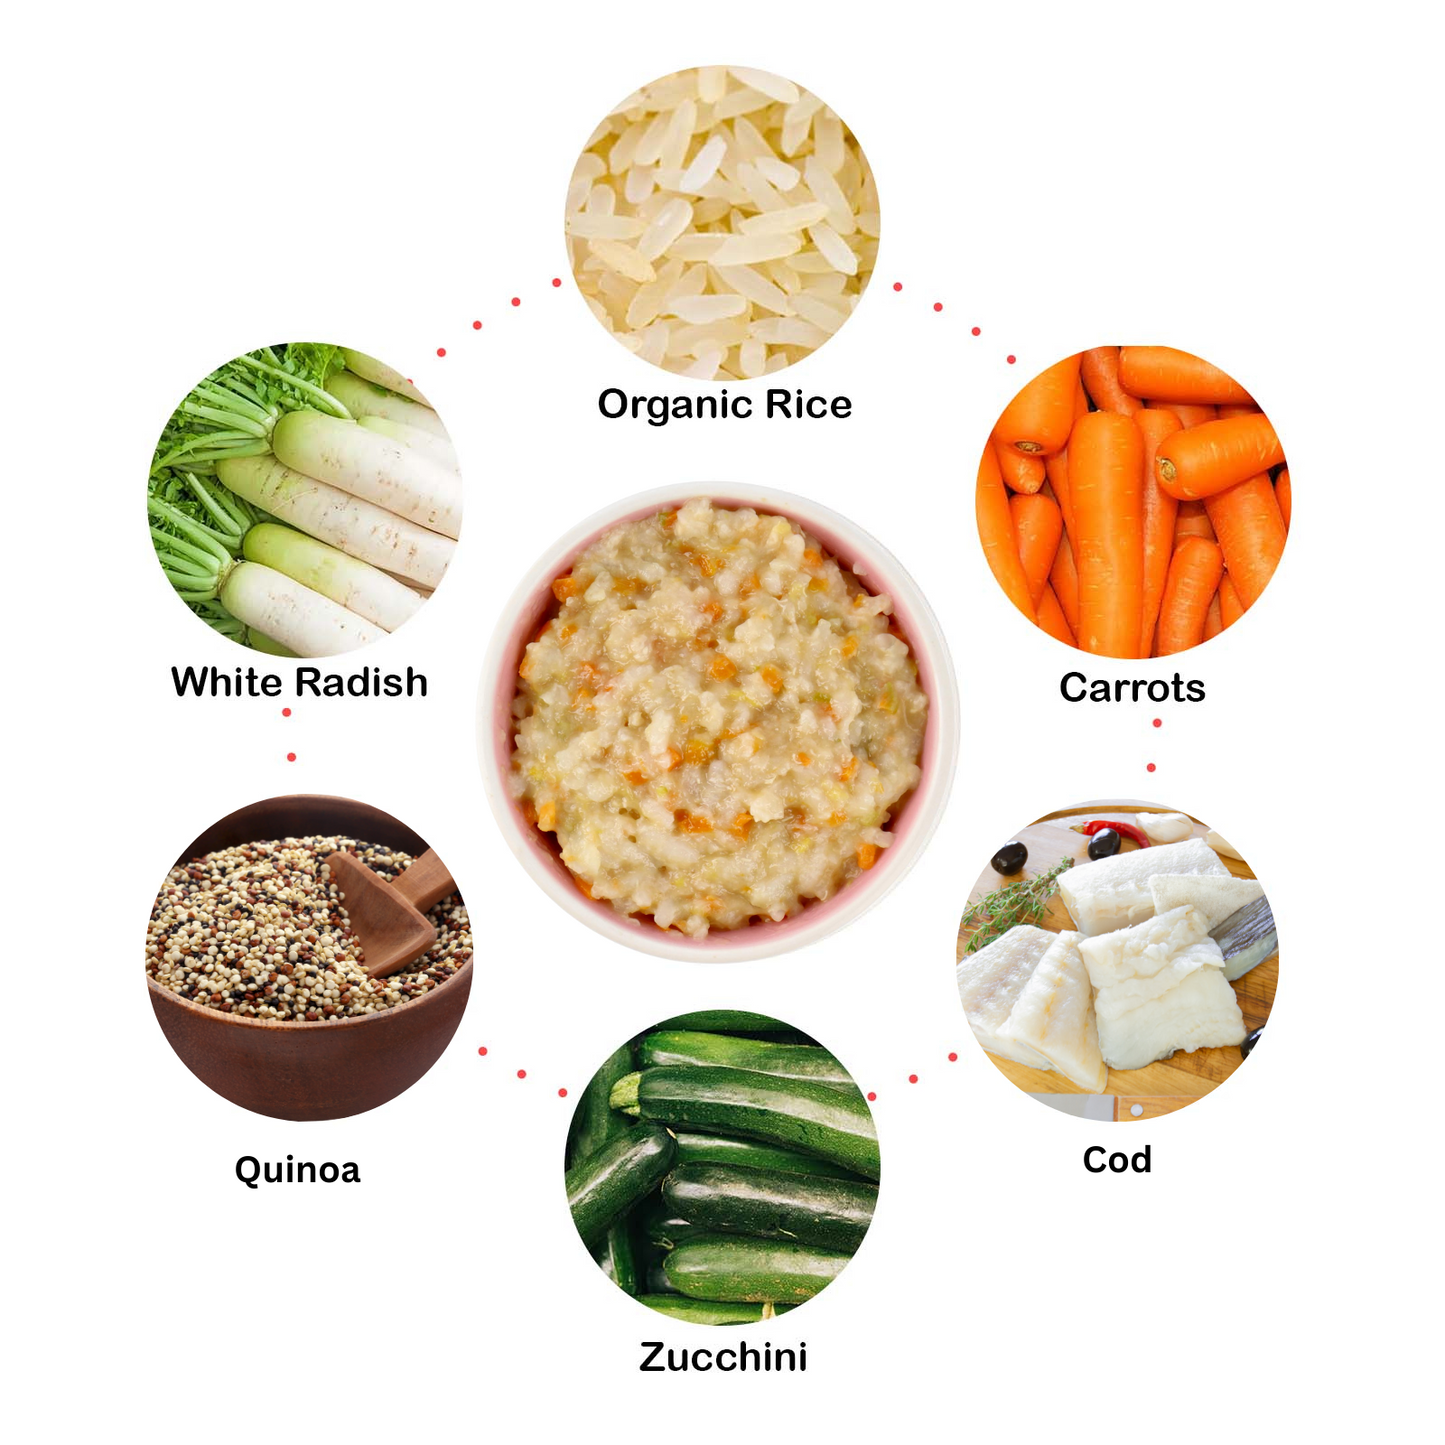 Eusik  - Baby Rice Porridge Select (Cod & Quinoa) 145g, 10mths+